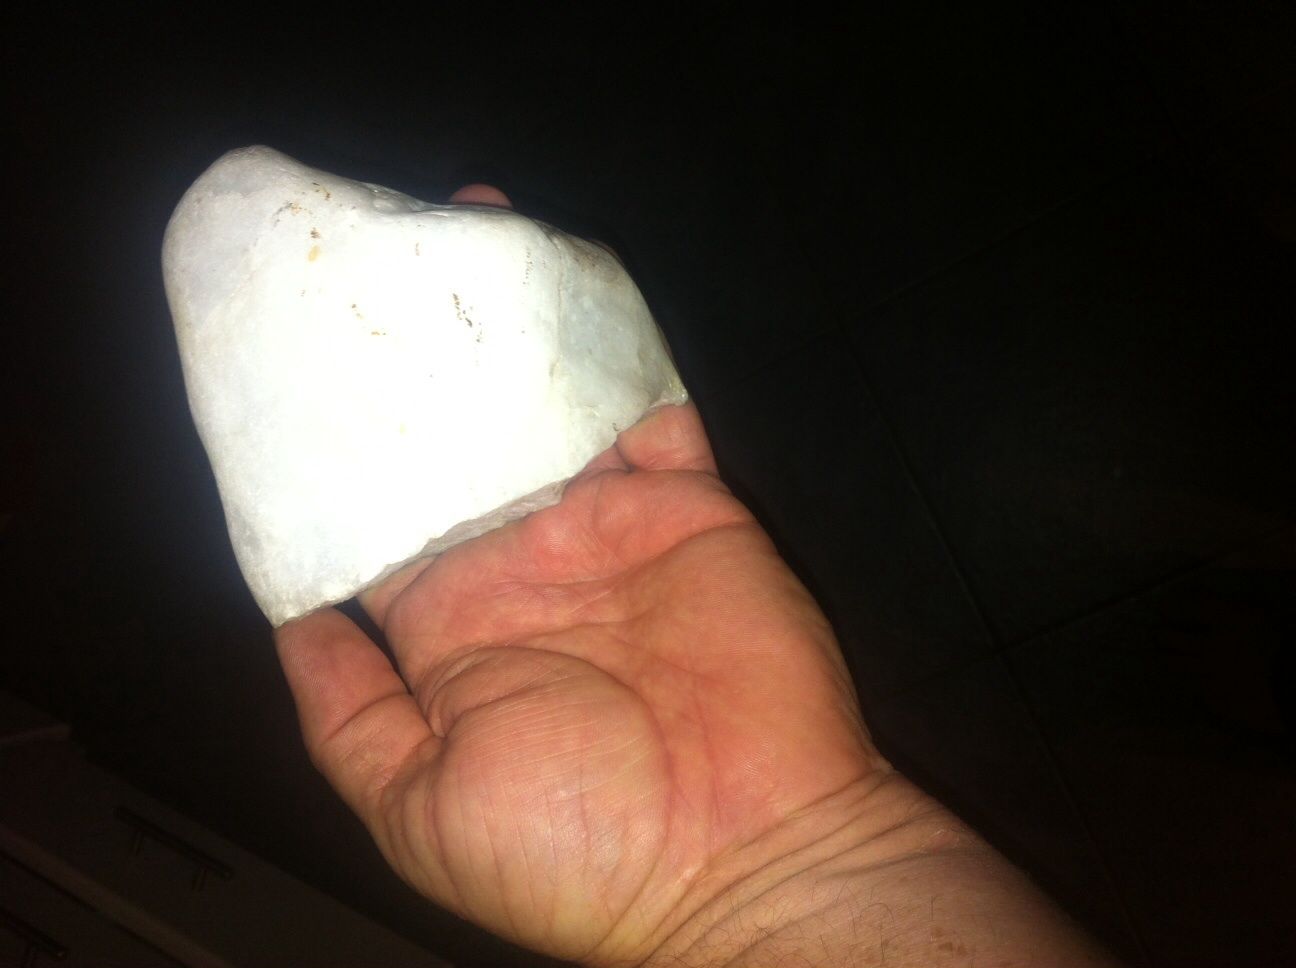 Seam quartz from old rIver channel